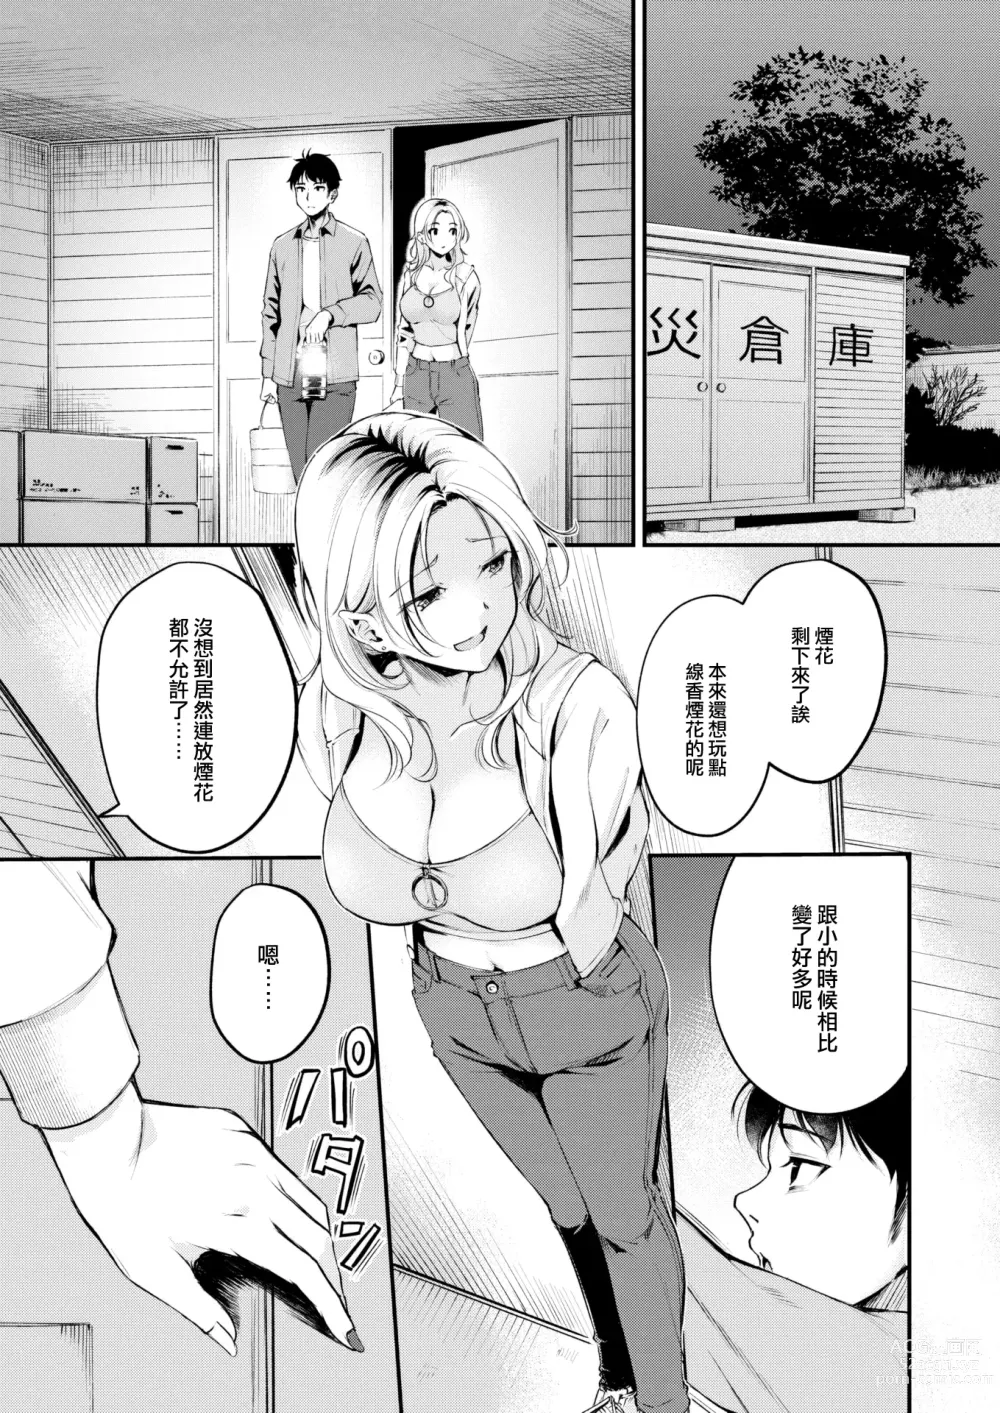 Page 6 of manga Senkou Hanabi no Koi